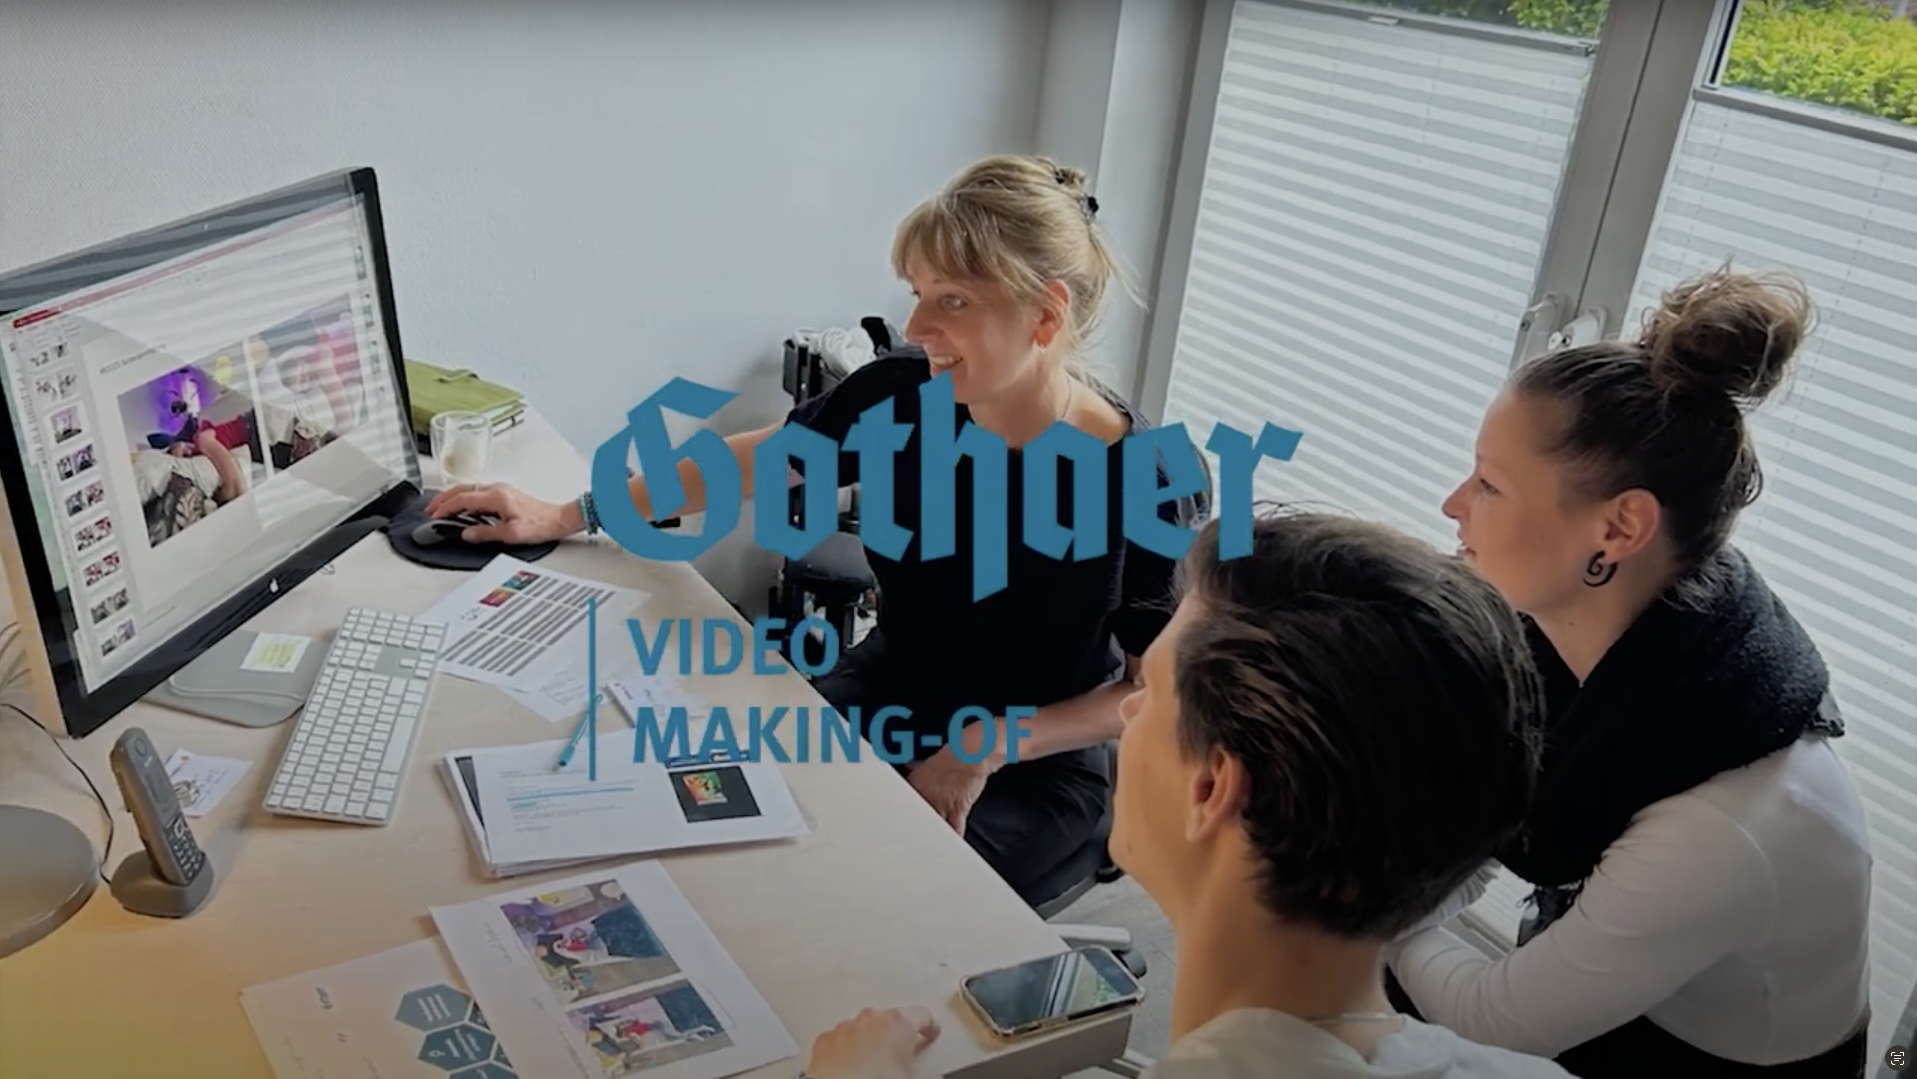 Gothaer Video Making-Of